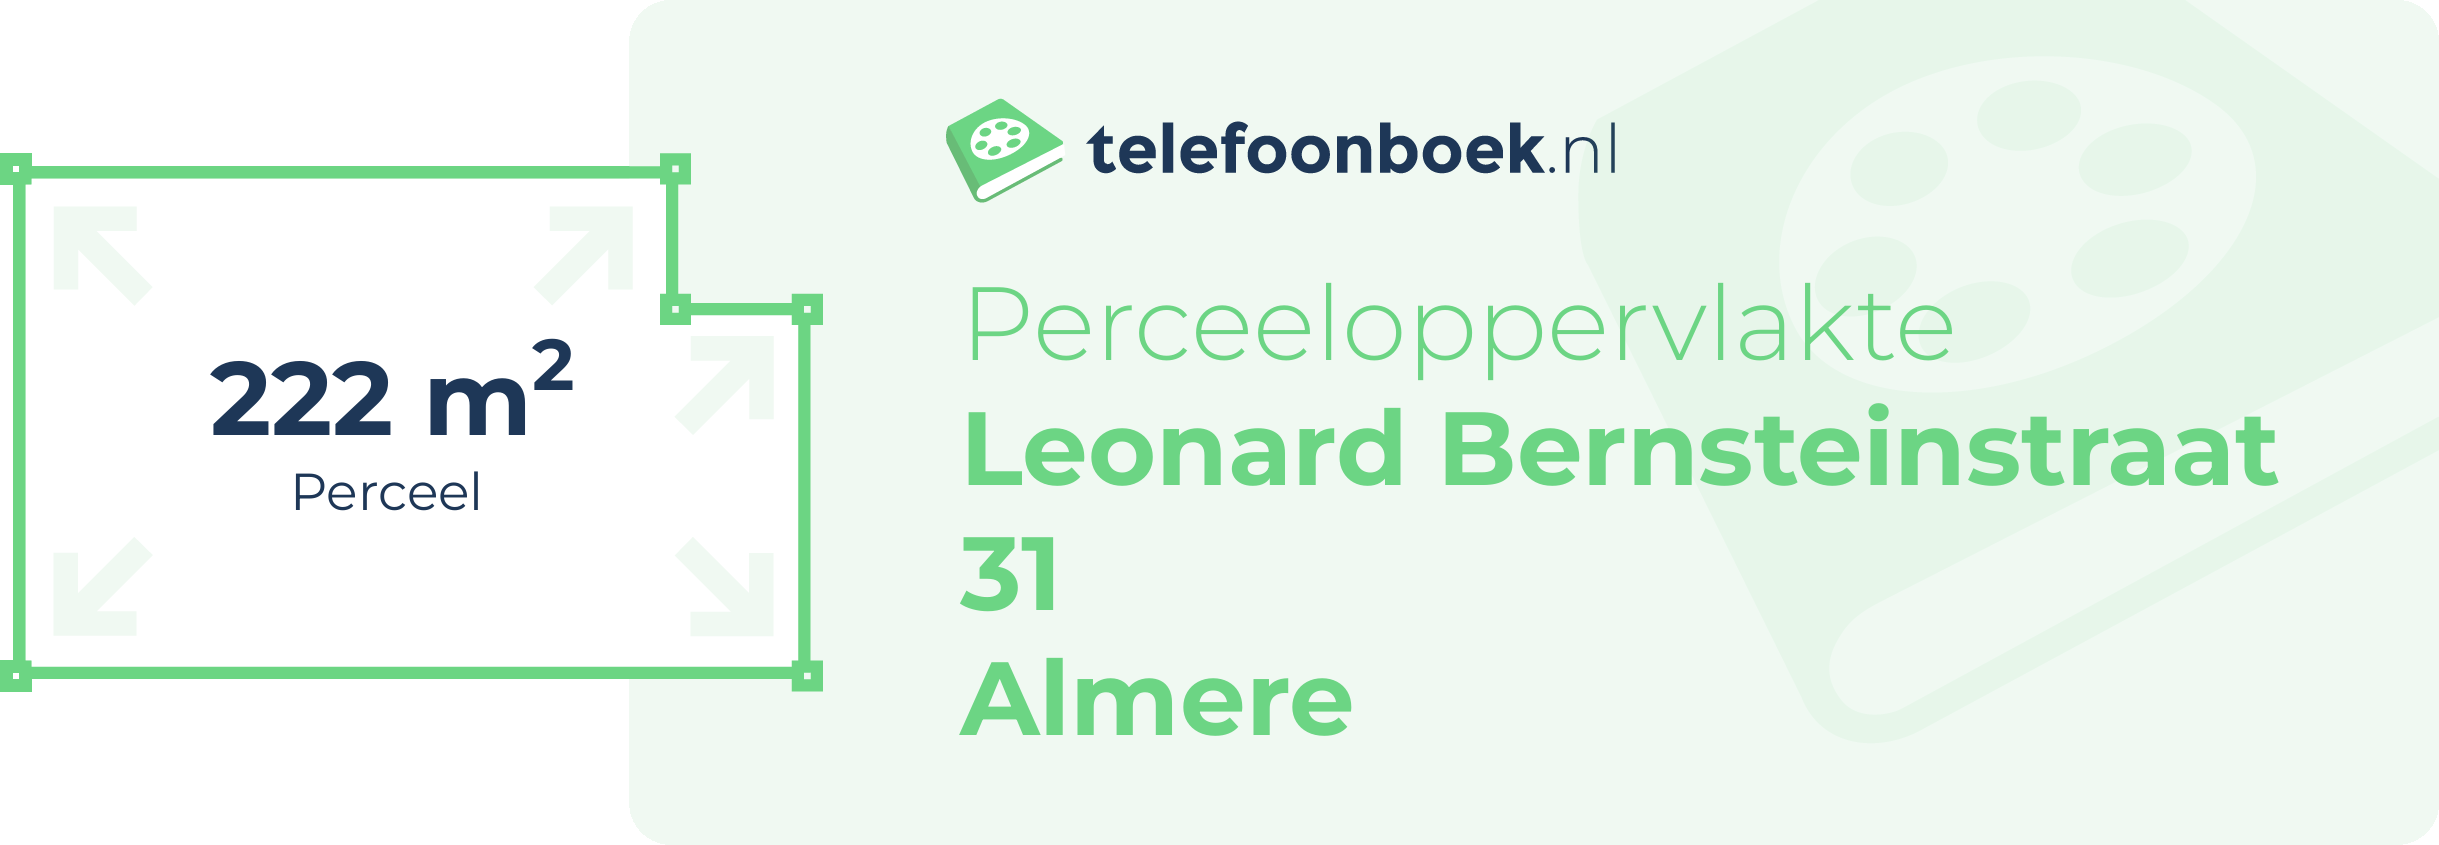 Perceeloppervlakte Leonard Bernsteinstraat 31 Almere